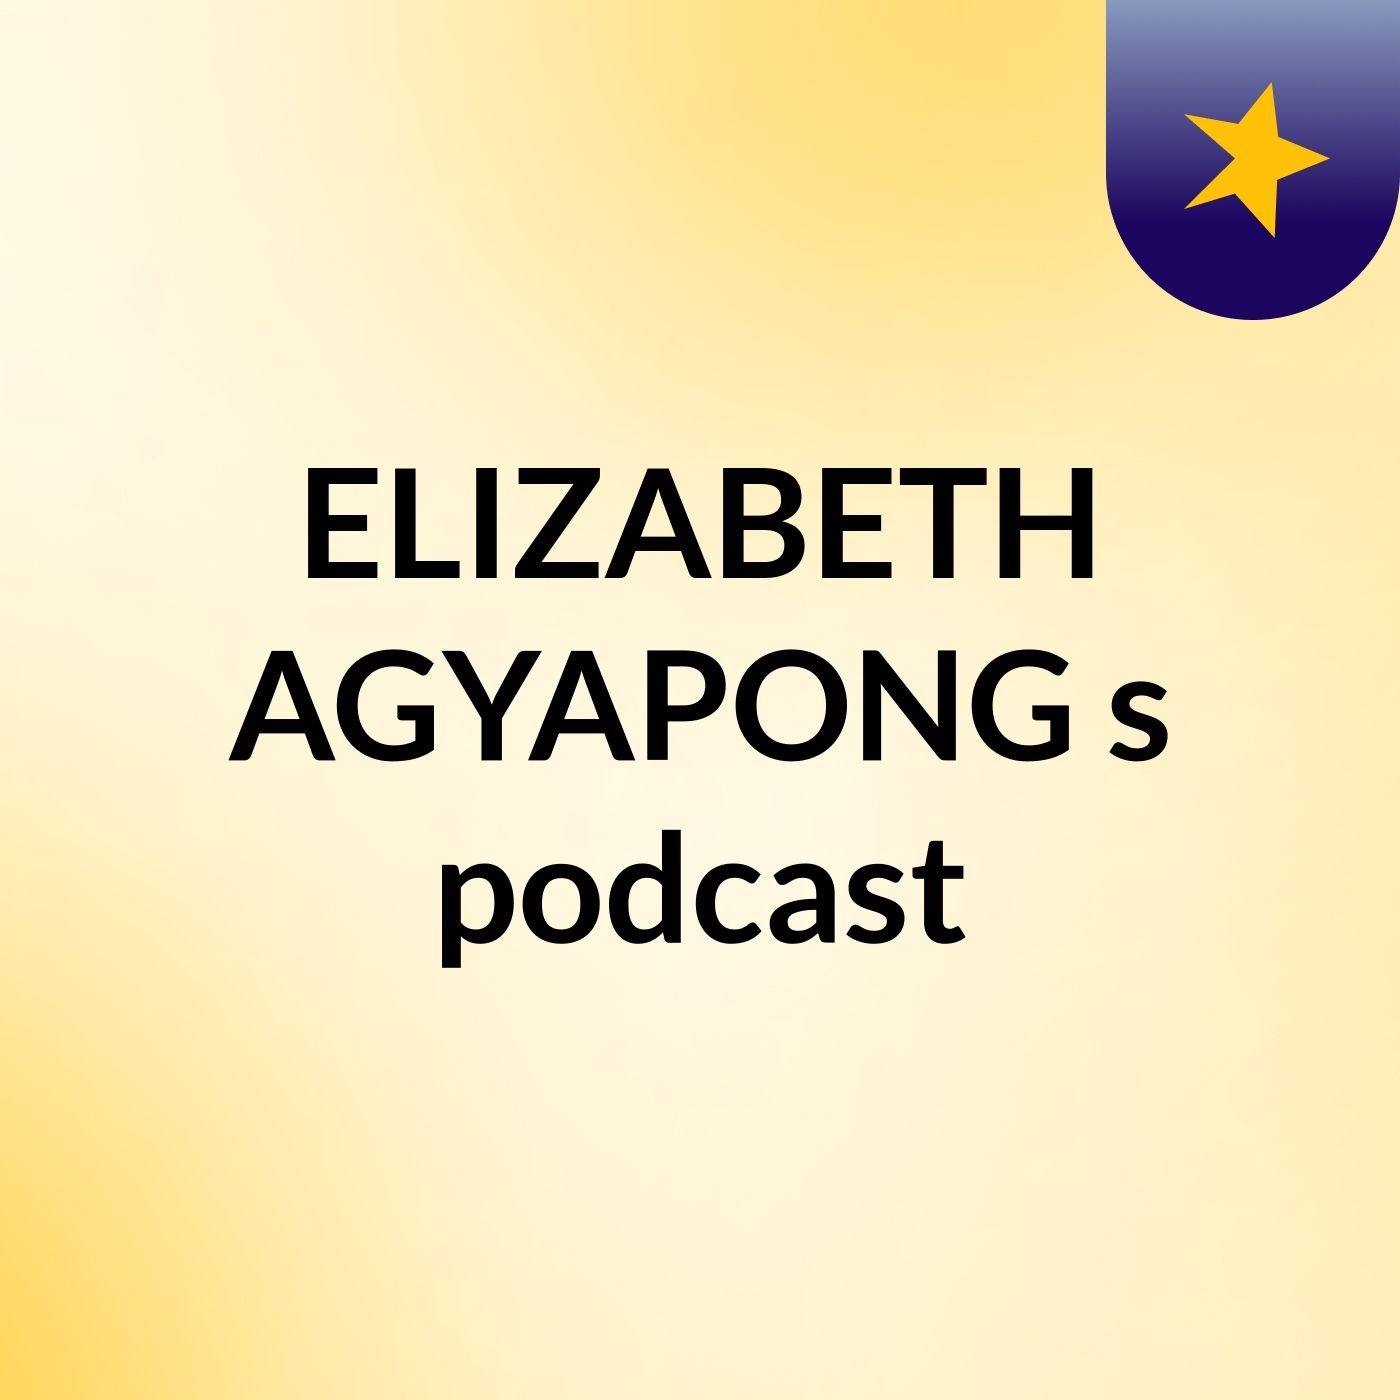 ELIZABETH AGYAPONG's podcast